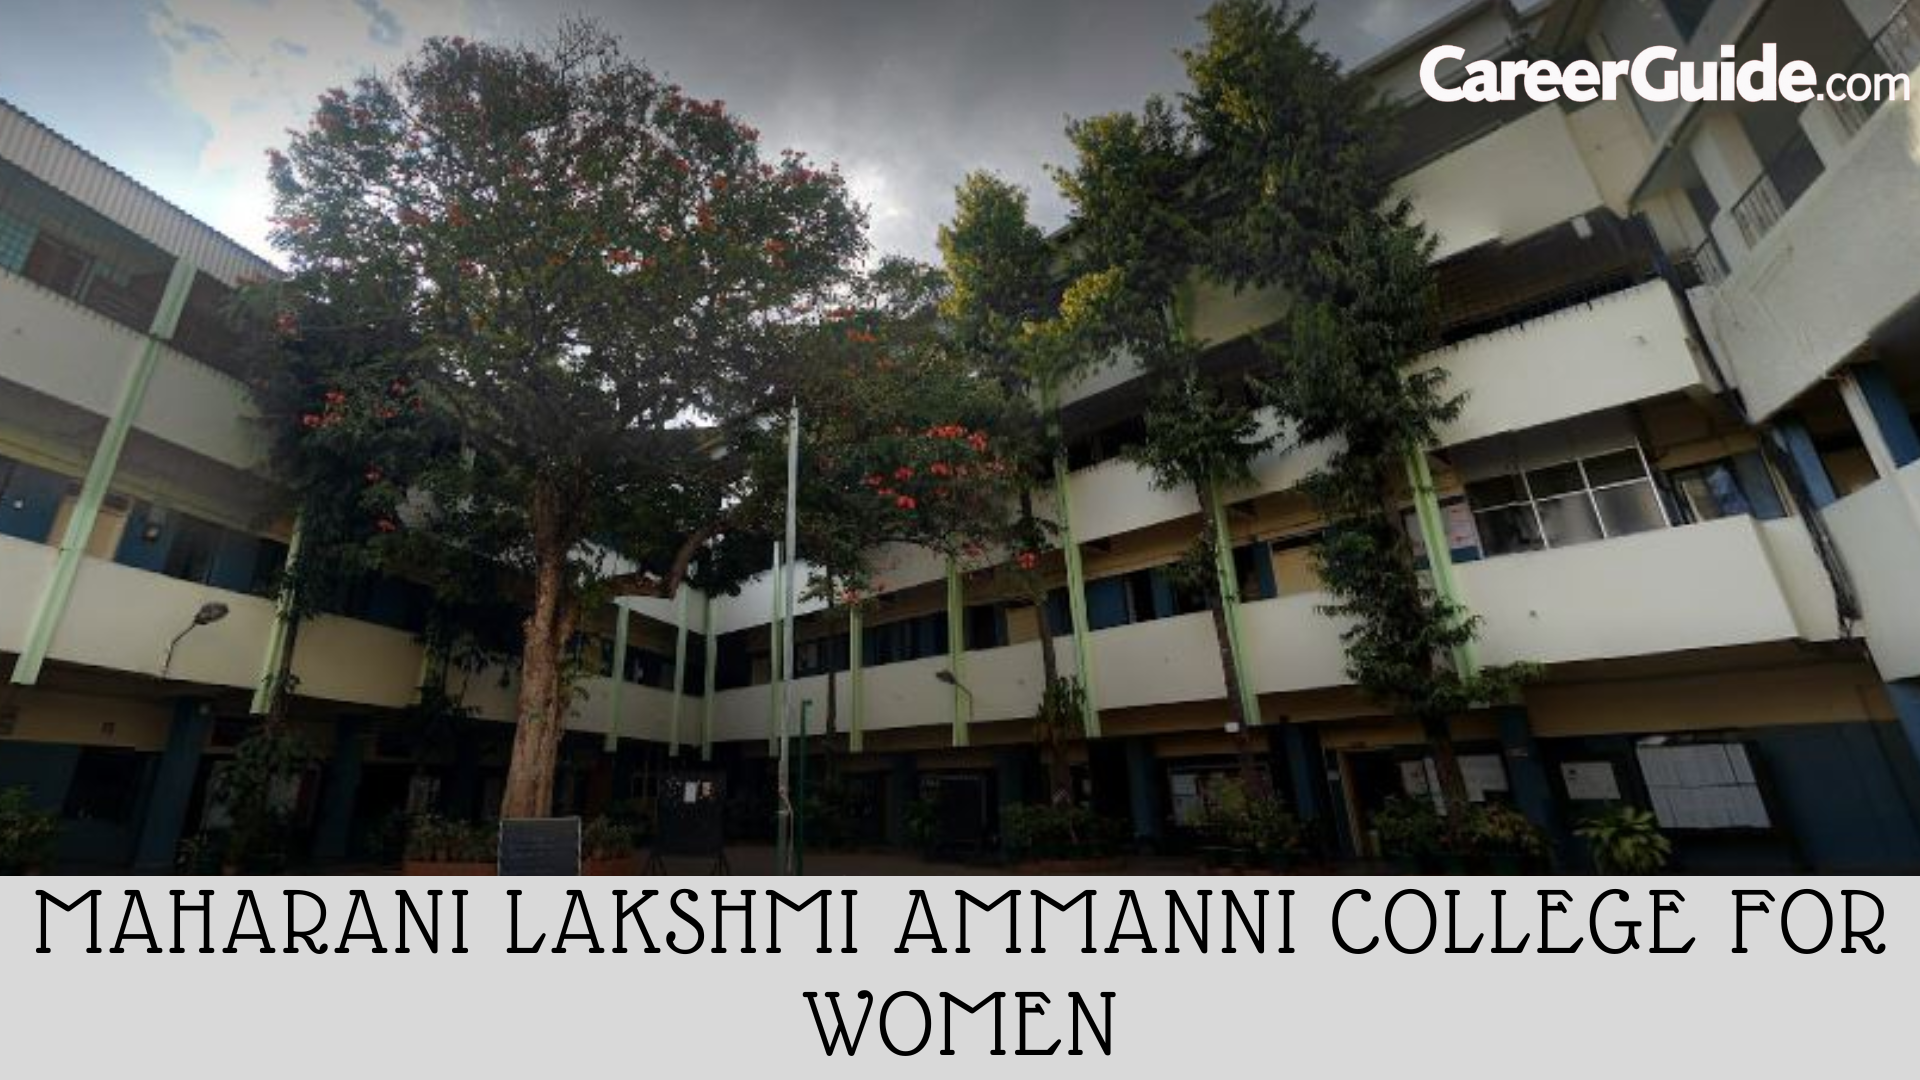 Maharani Lakshmi Ammanni College For Women (bangal)